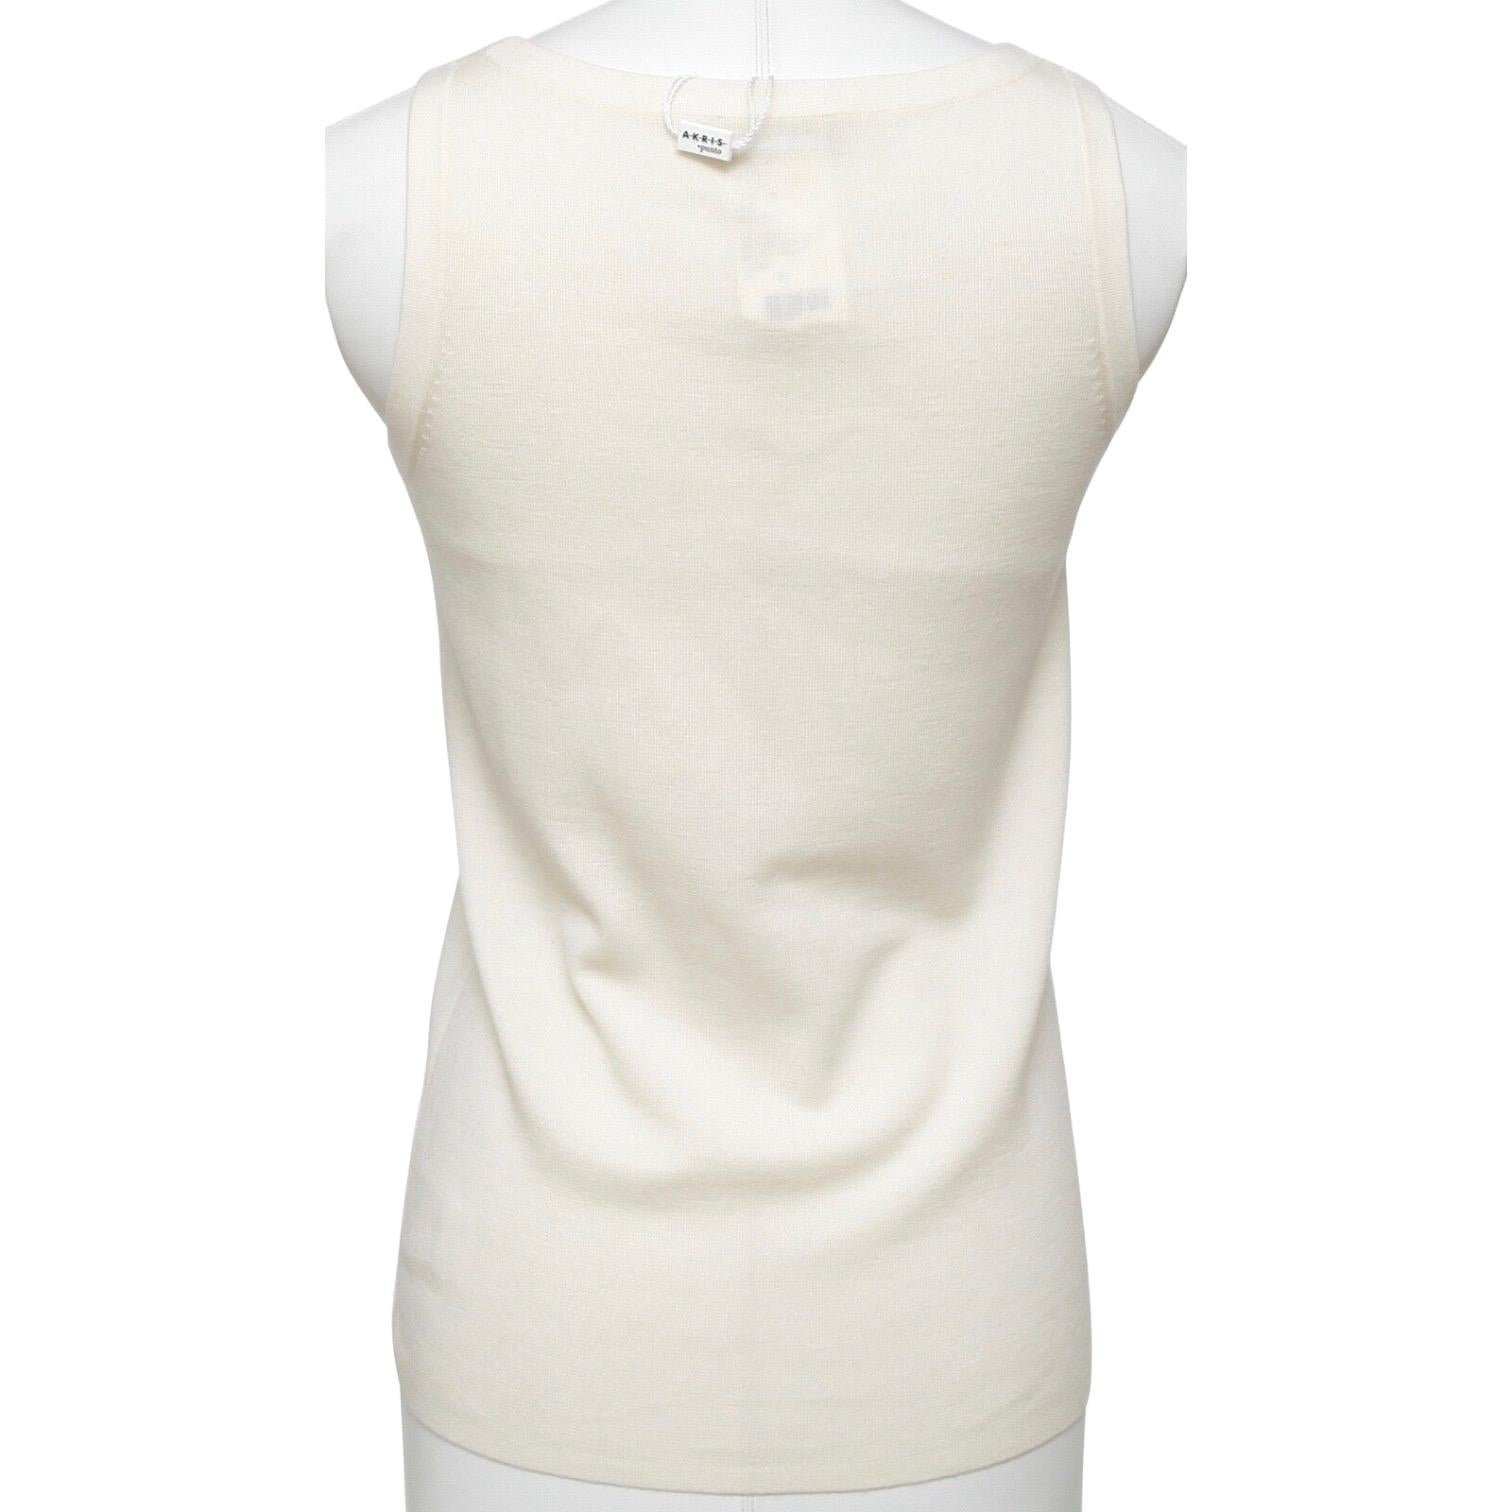 AKRIS PUNTO Sleeveless Top Sweater Knit Shirt Shell Wool Cream Sz 8 40 BNWT For Sale 2